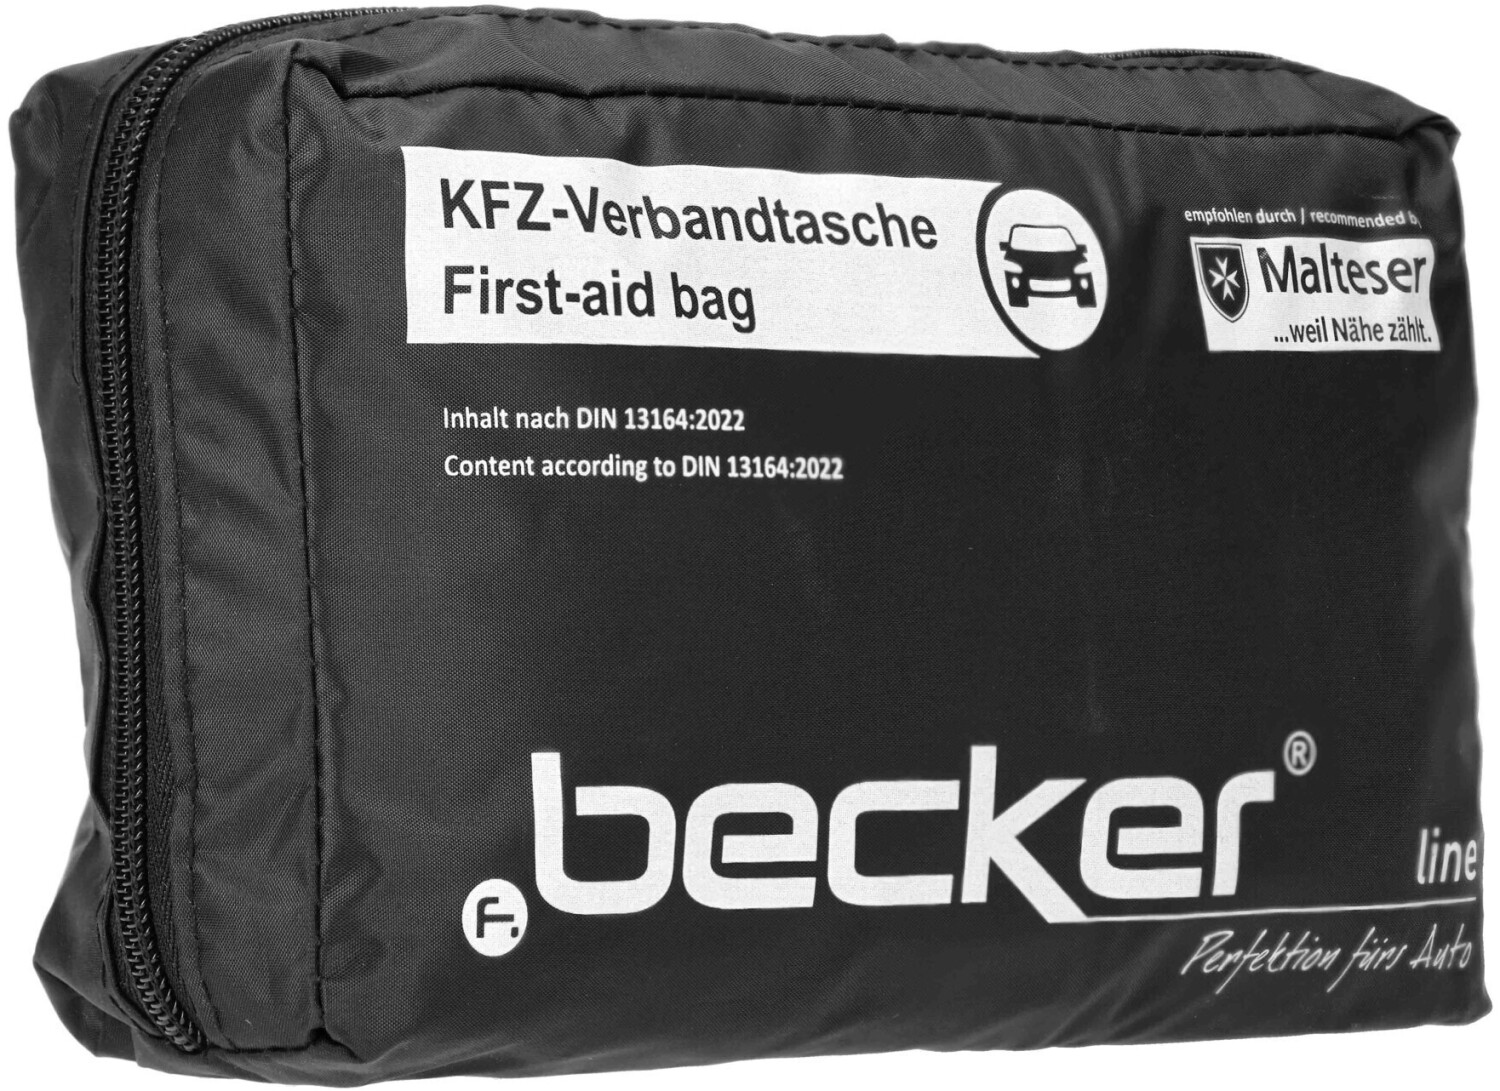 f.becker_line KFZ-Verbandtasche DIN 13164 ab 7,15